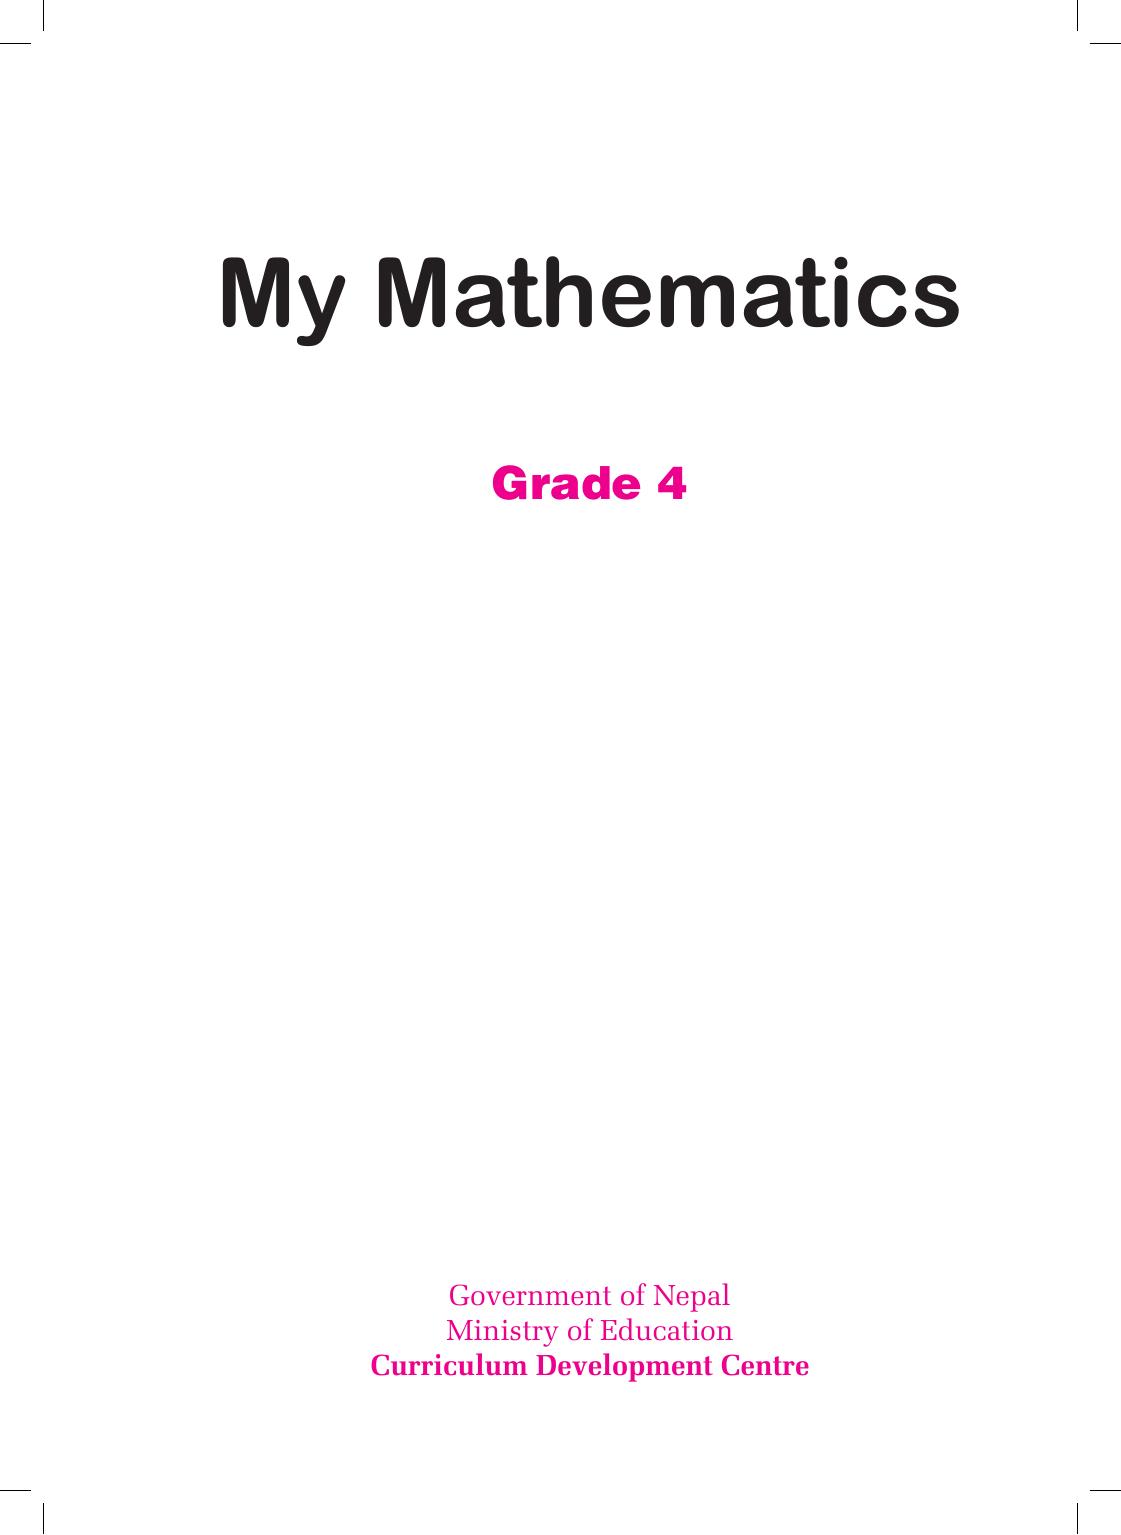 CDC 2074 - My Mathematics Grade 4